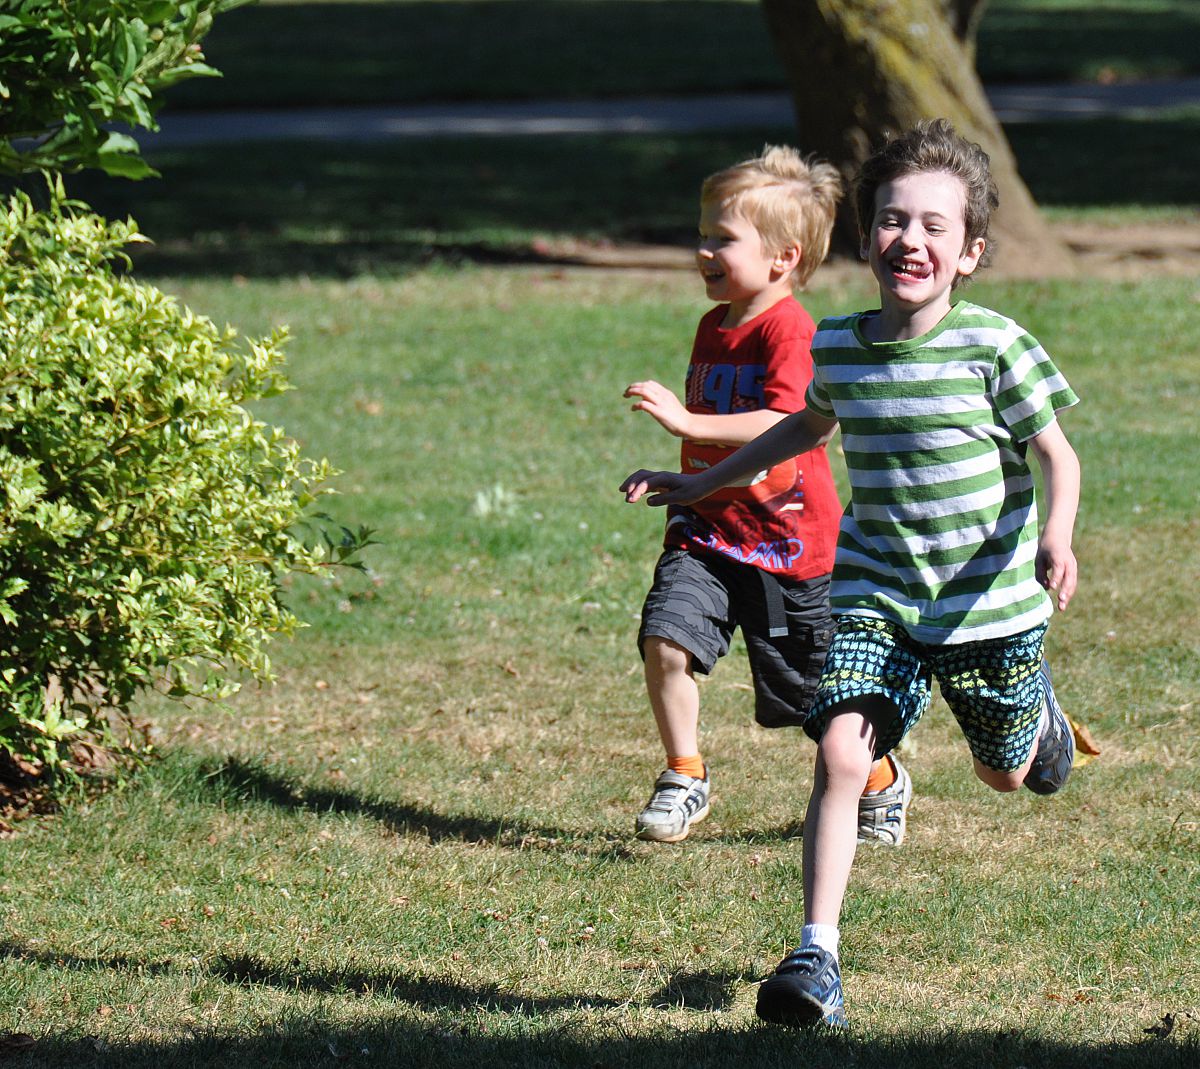 Running, running, running - from the Preschool graduation party photo gallery.